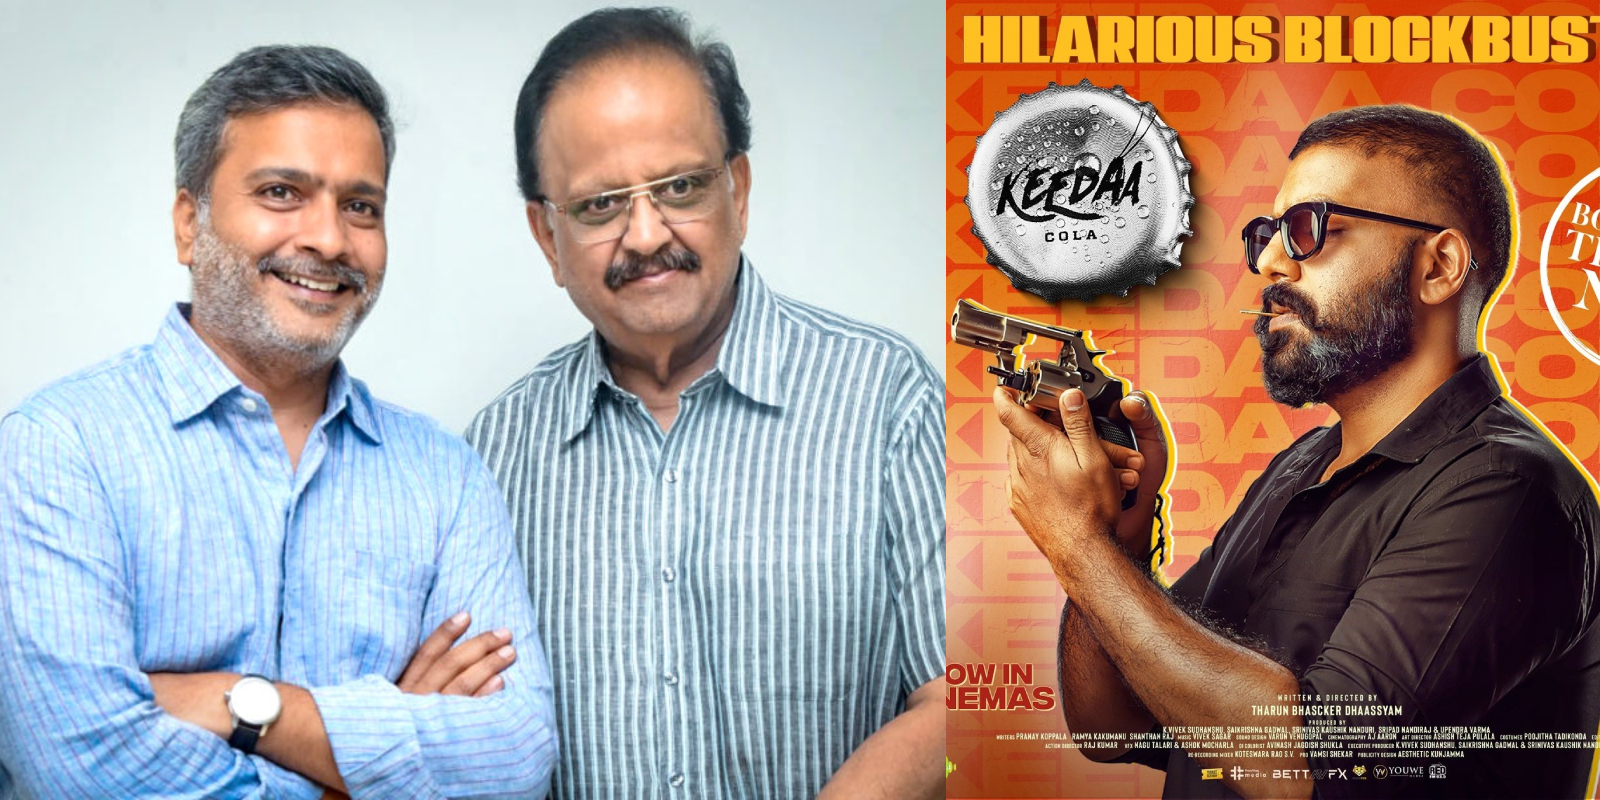 Singer SP Charan files case against ‘Keedaa Cola’ director Tharun Bhascker. Here’s why